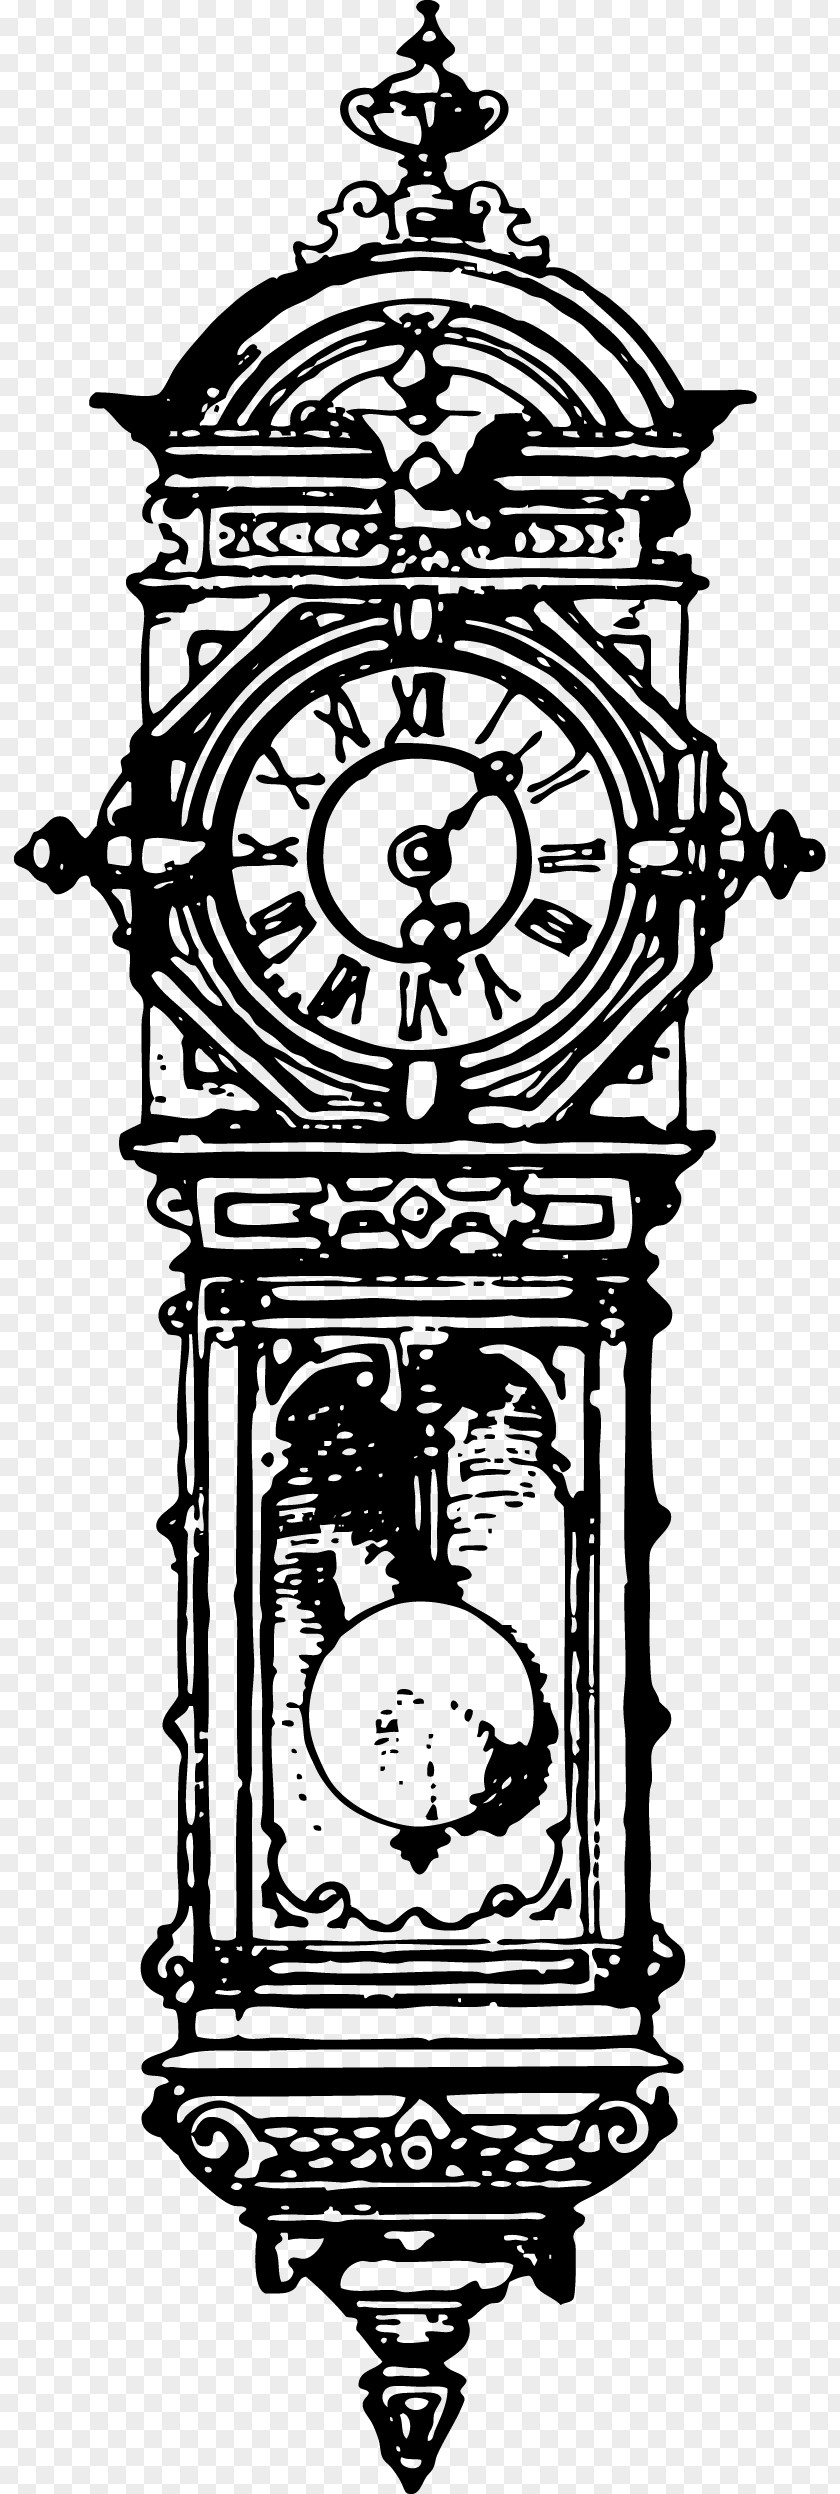 European-style Hand-painted Big Ben Pendulum Clock Longcase Clip Art PNG